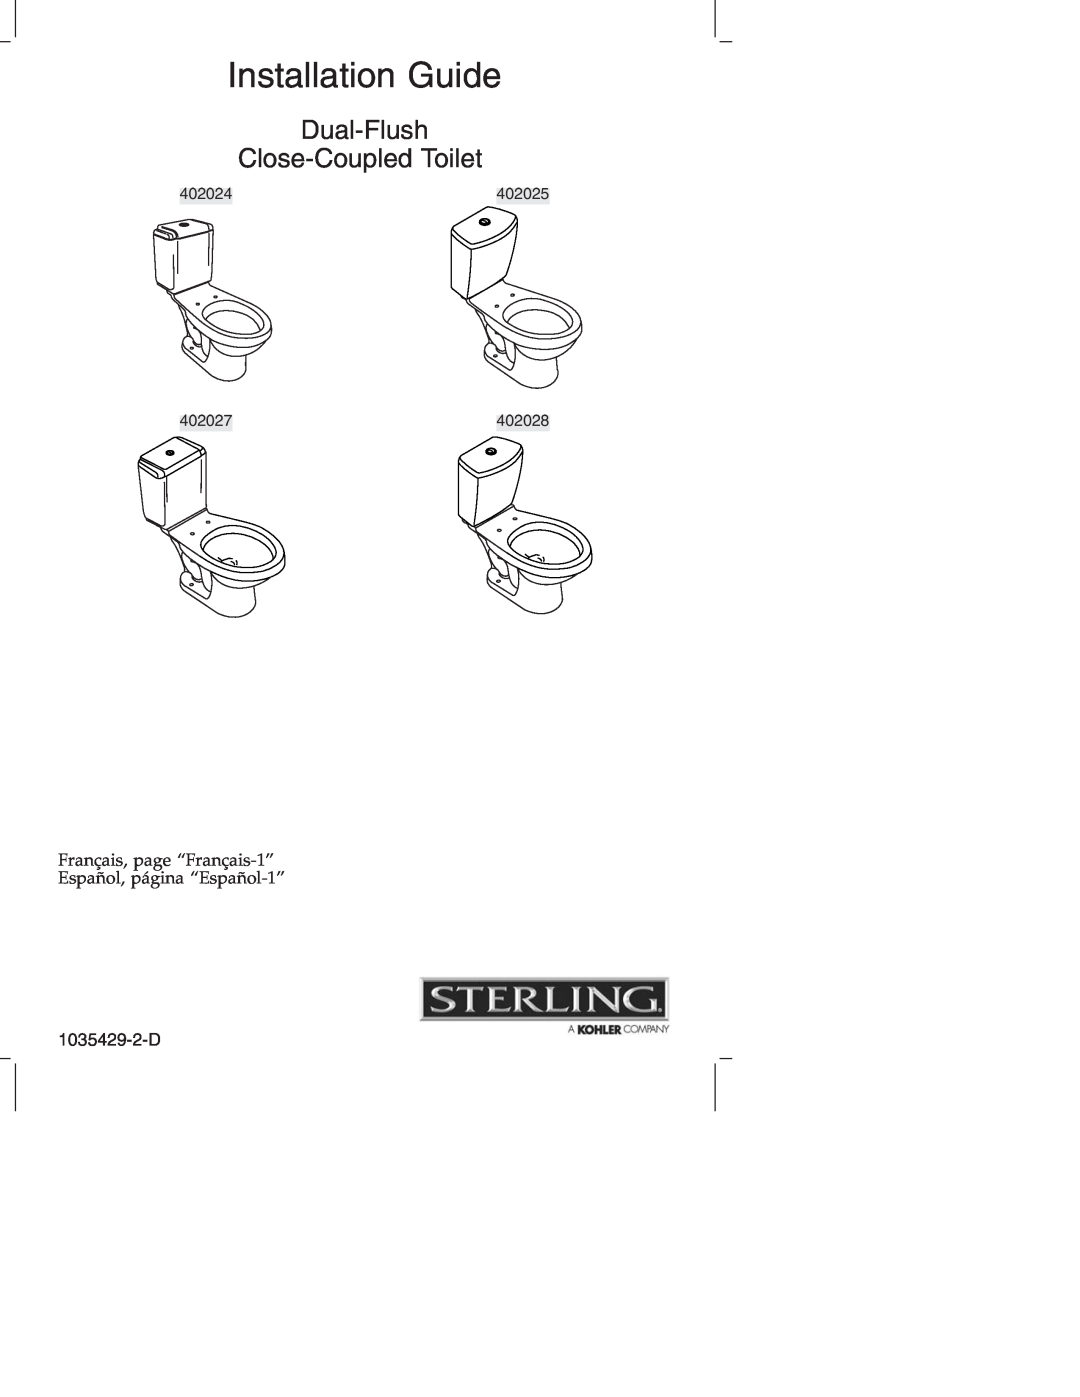 Sterling Plumbing 402024 manual Installation Guide, Dual-Flush Close-CoupledToilet, 402025, 402027, 402028 